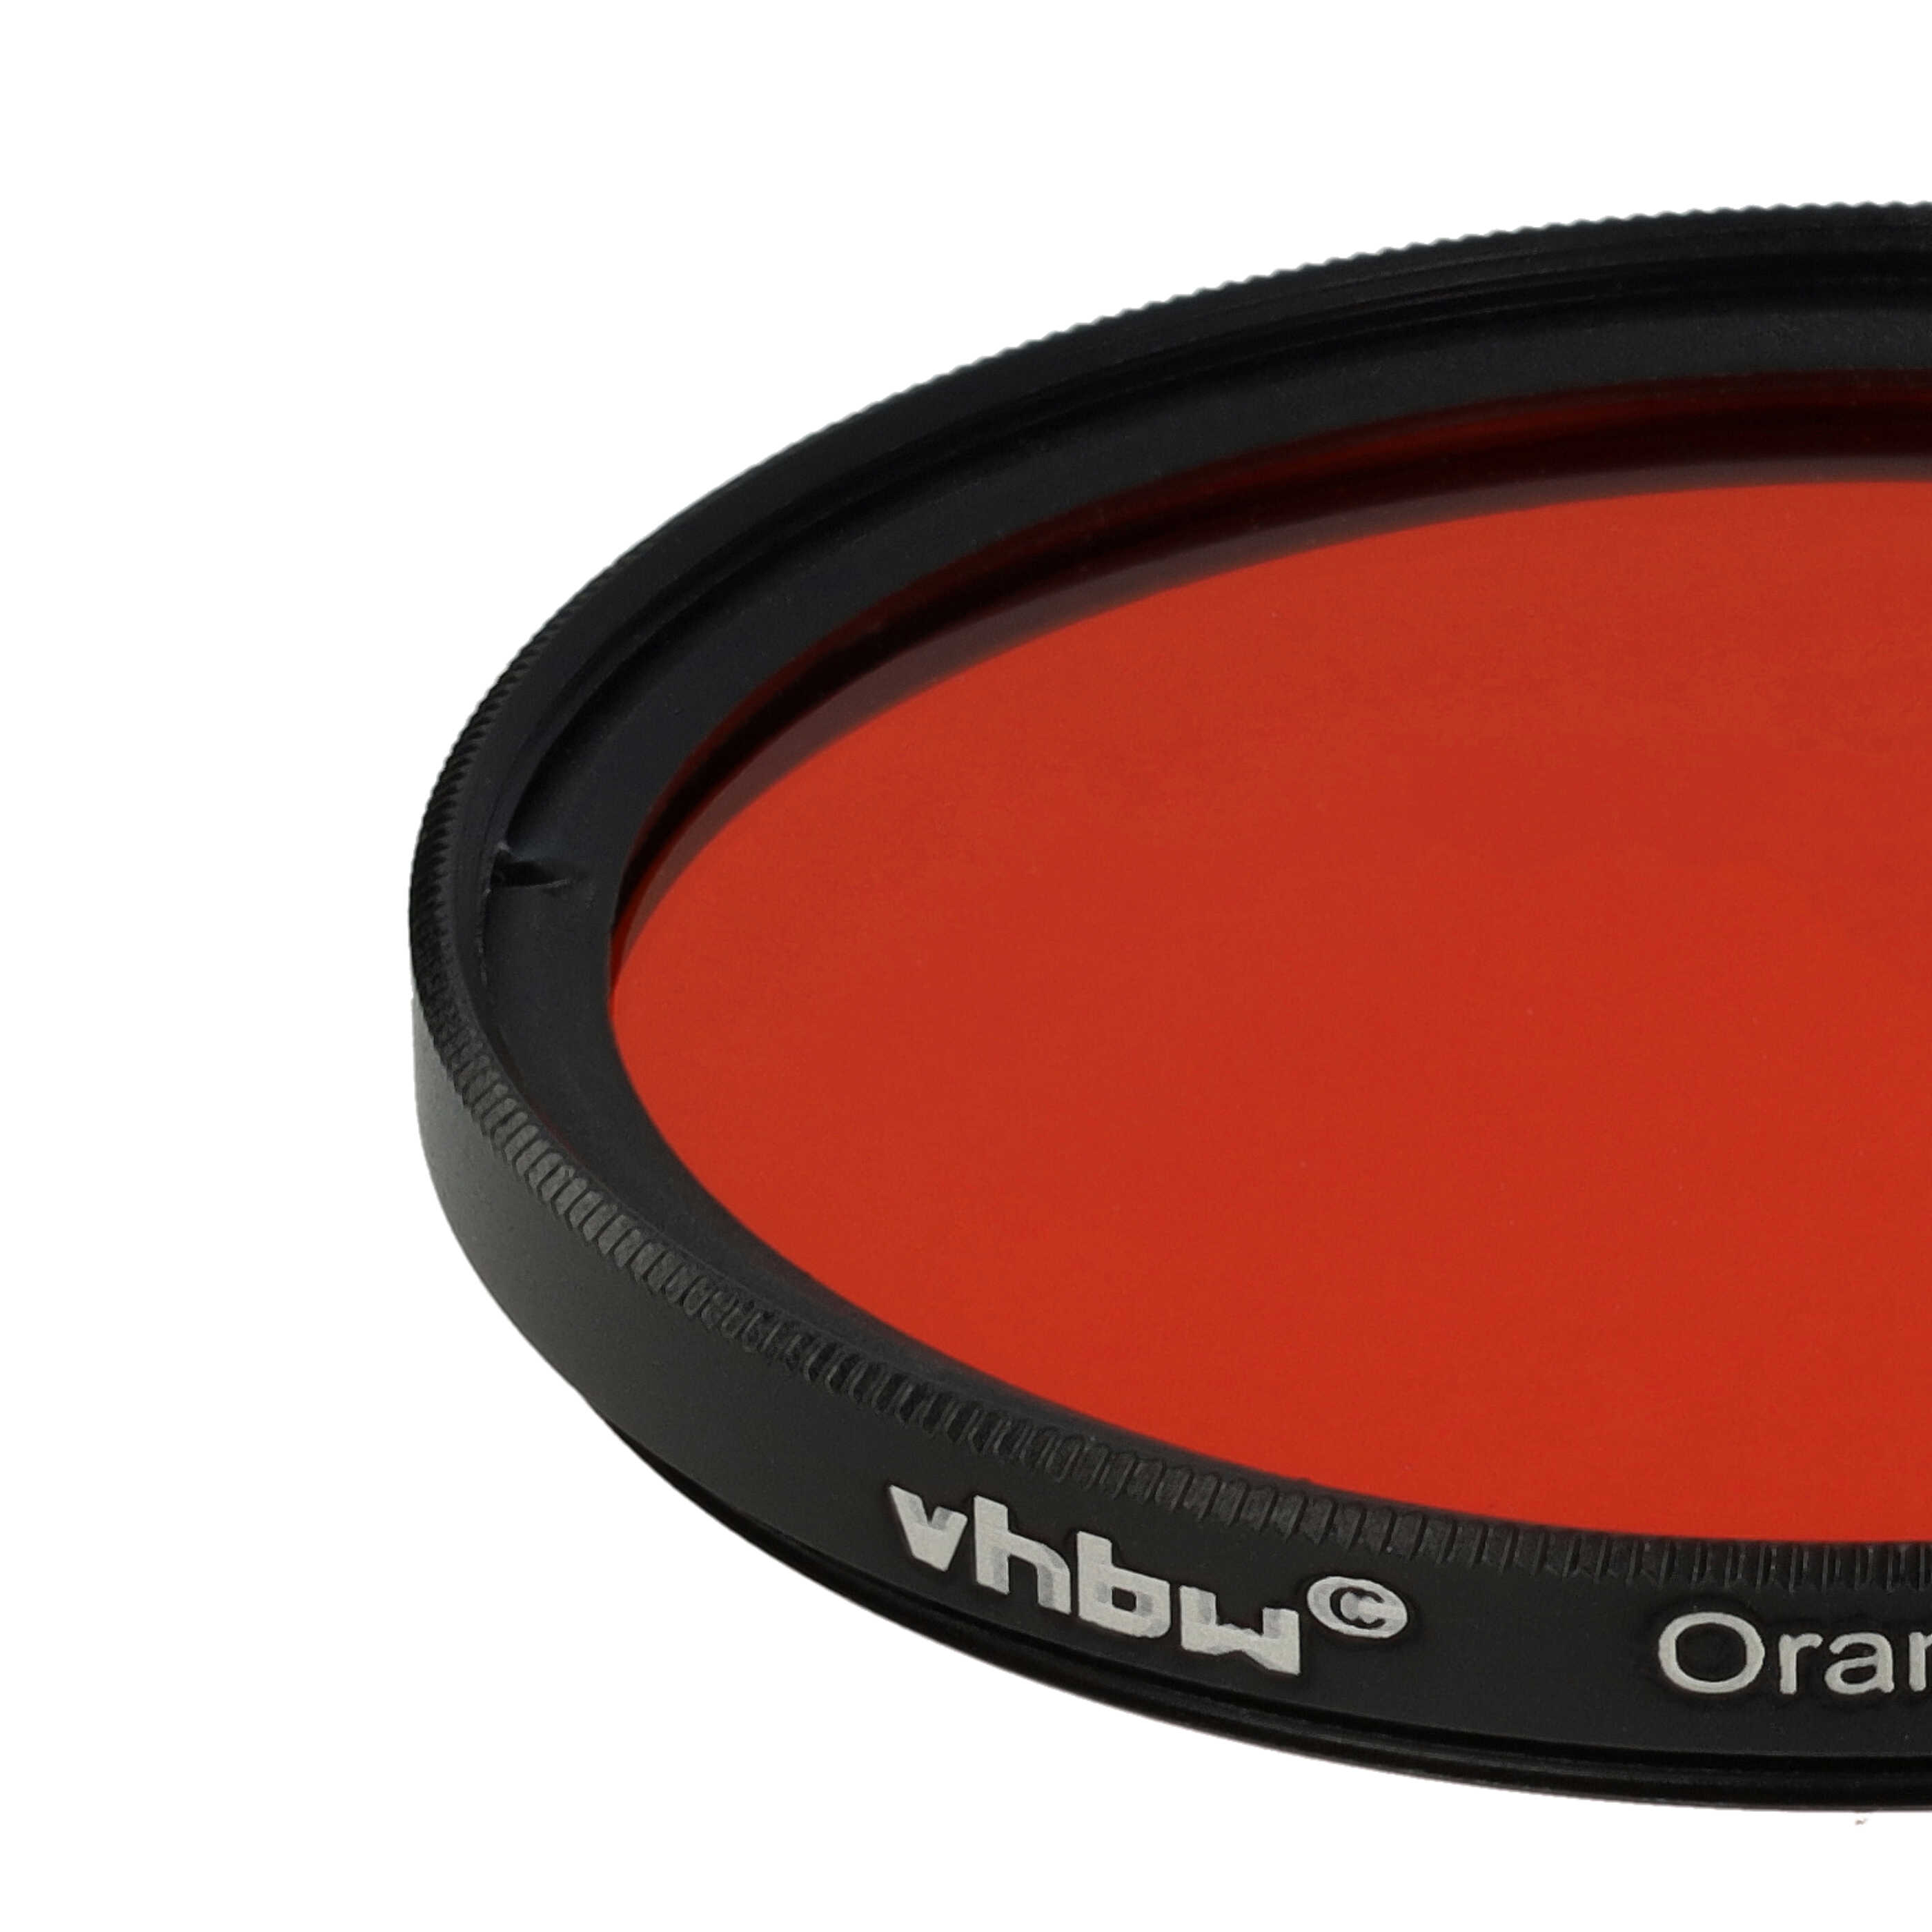 Coloured Filter, Orange suitable for Camera Lenses with 55 mm Filter Thread - Orange Filter